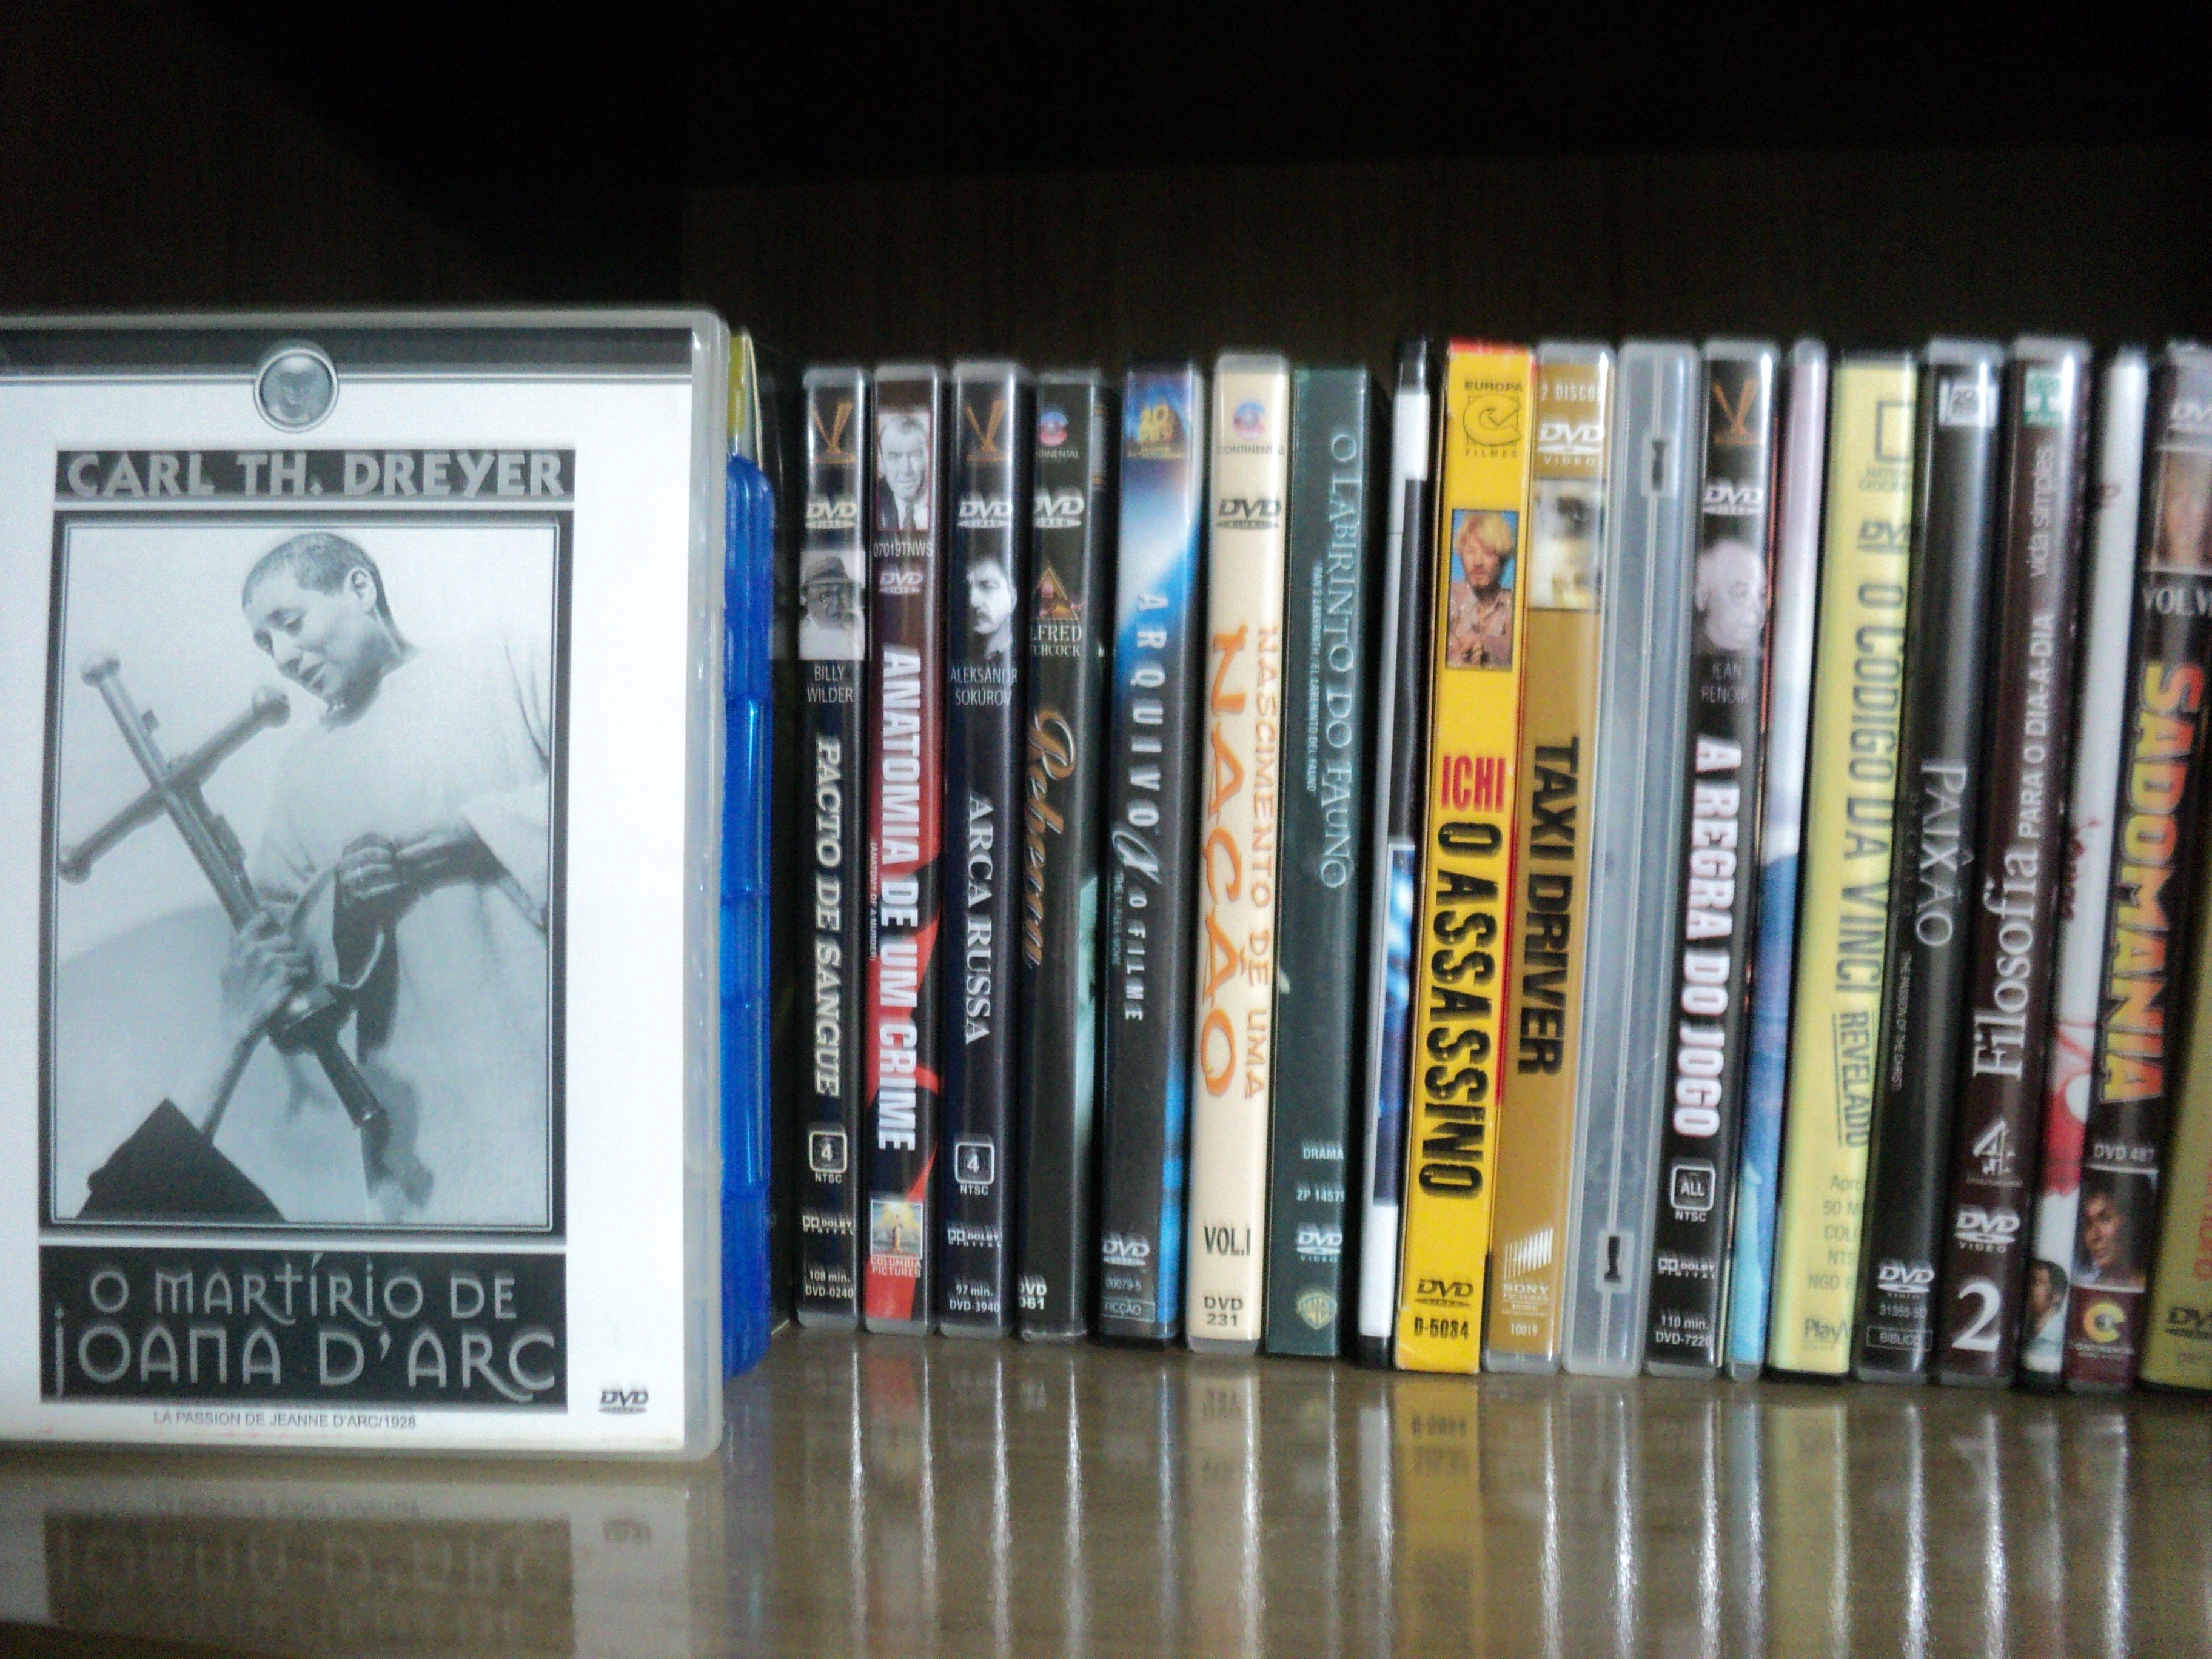 A DAMA DE VERMELHO - Gene Wilder - Kelly brook - DVD